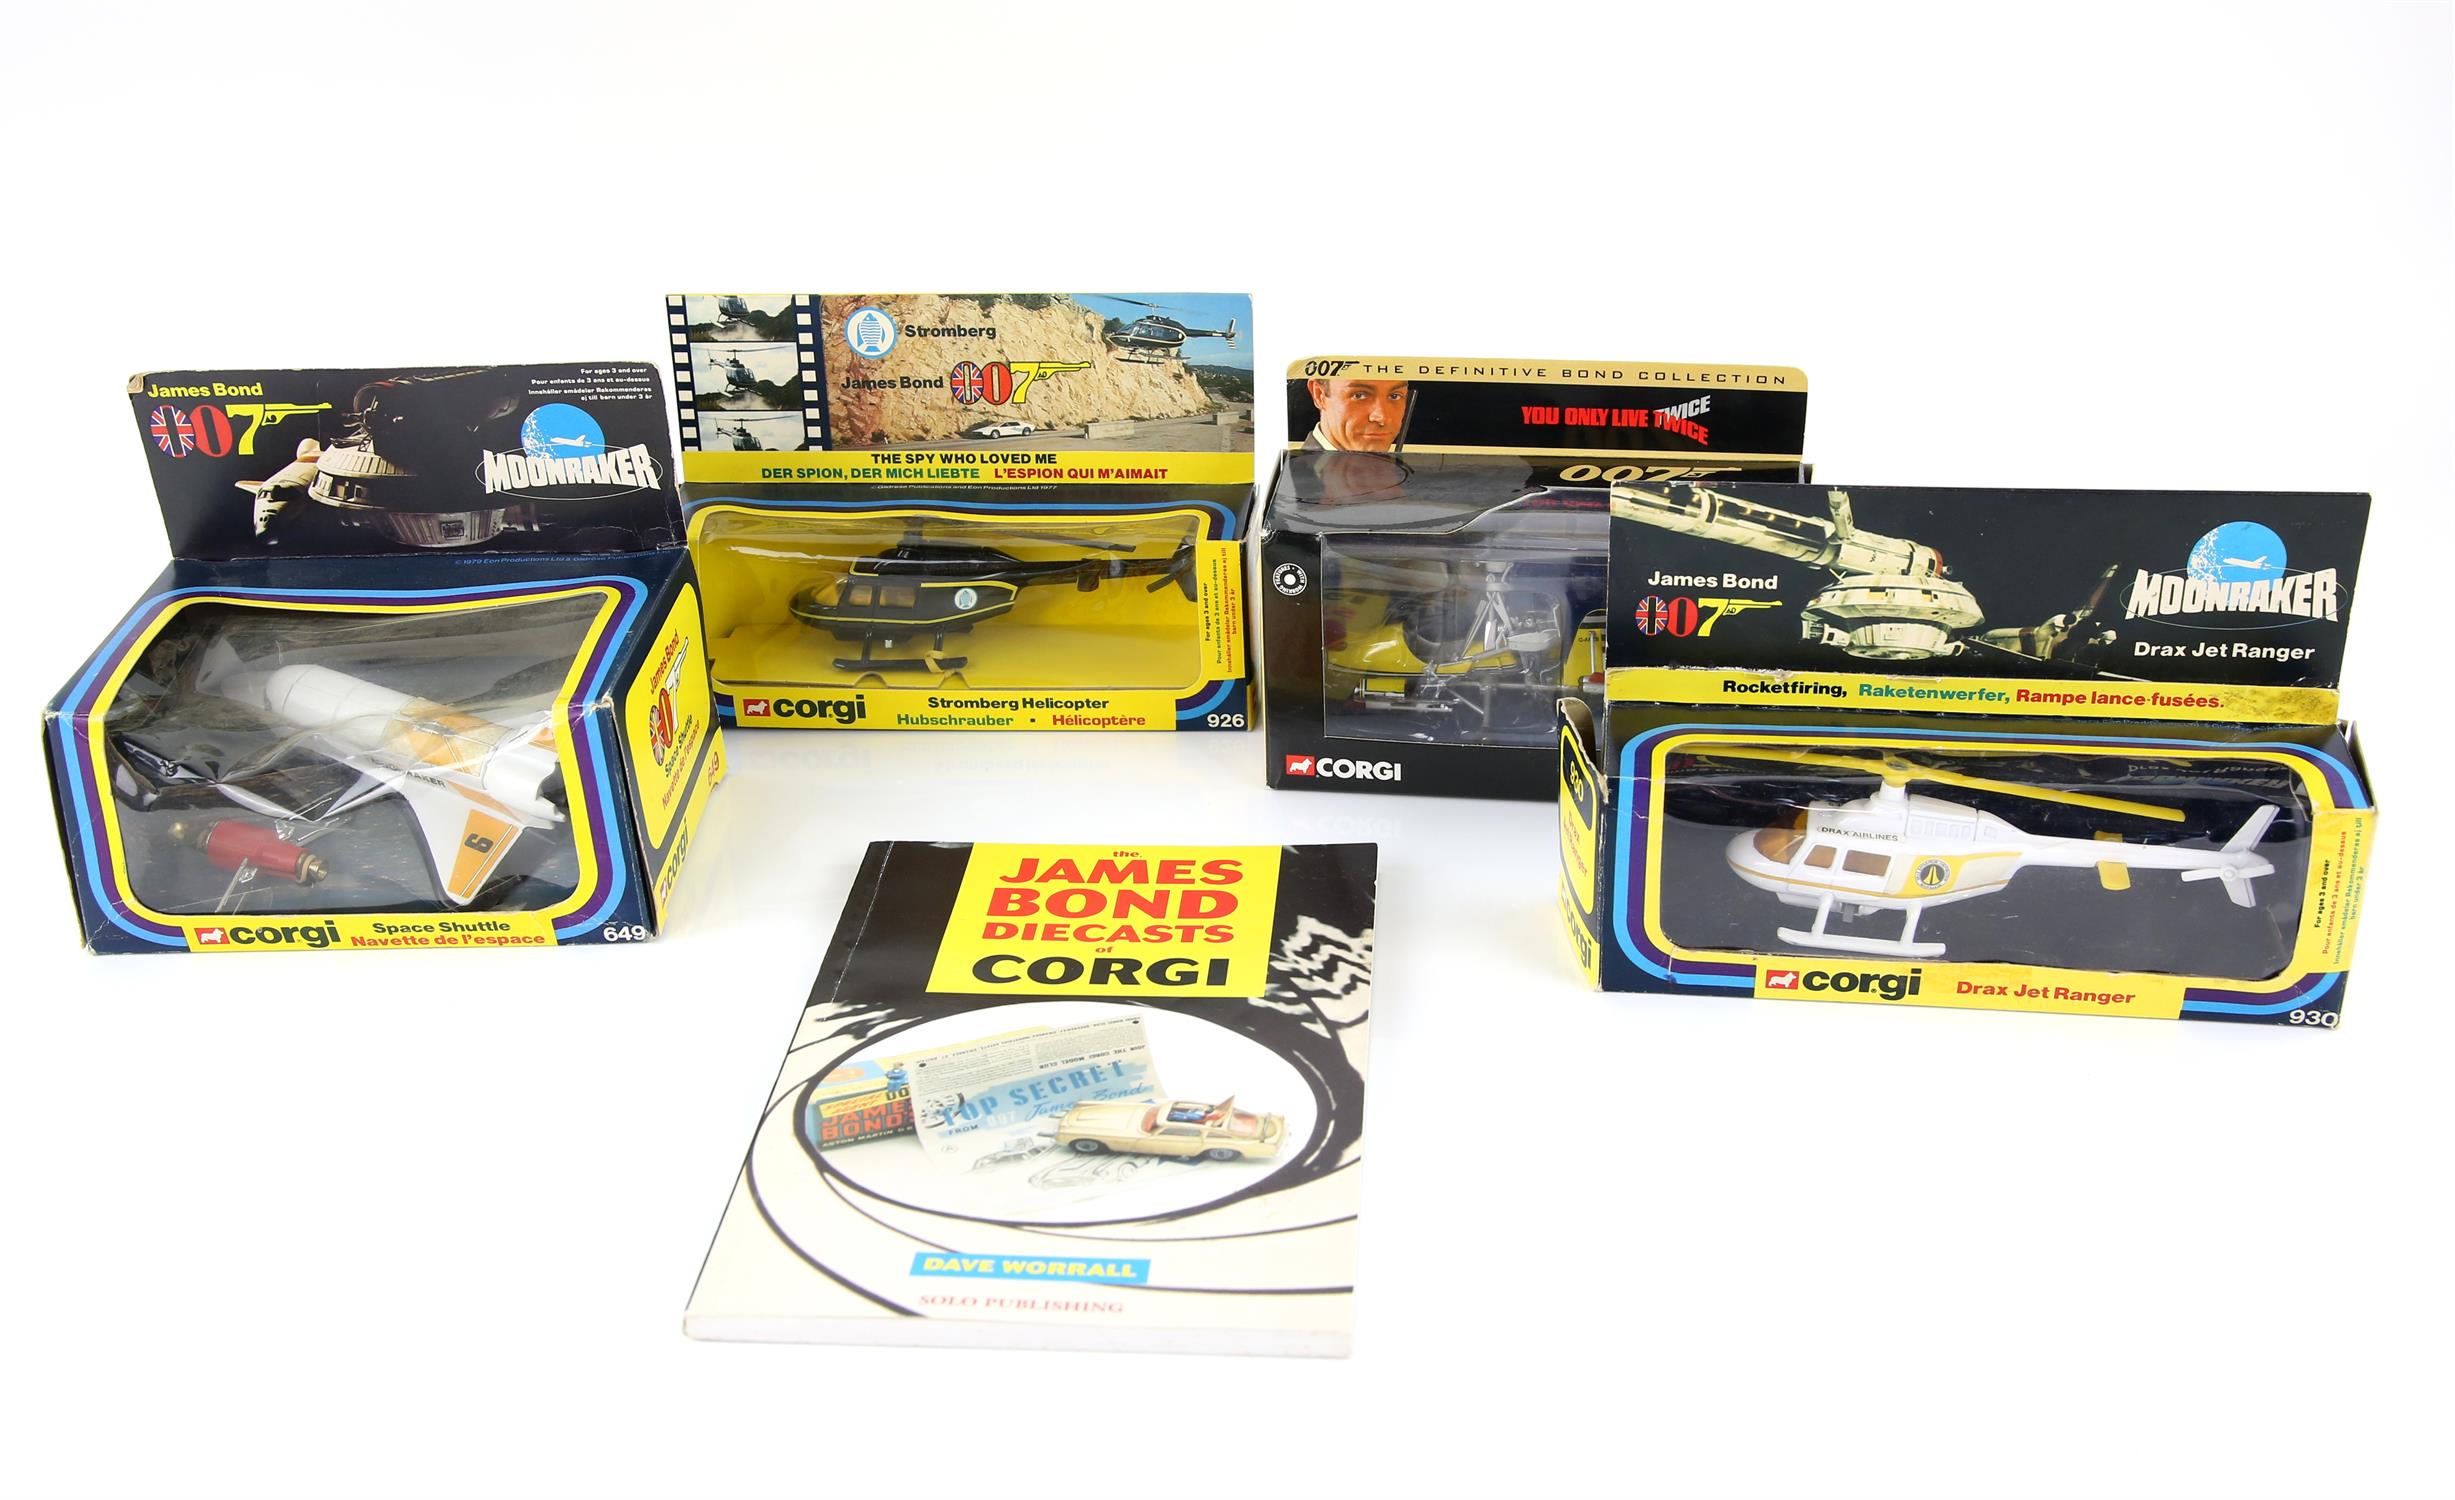 James Bond Corgi - Four boxed models including Drax Jet Ranger 930, Space Shuttle 649,